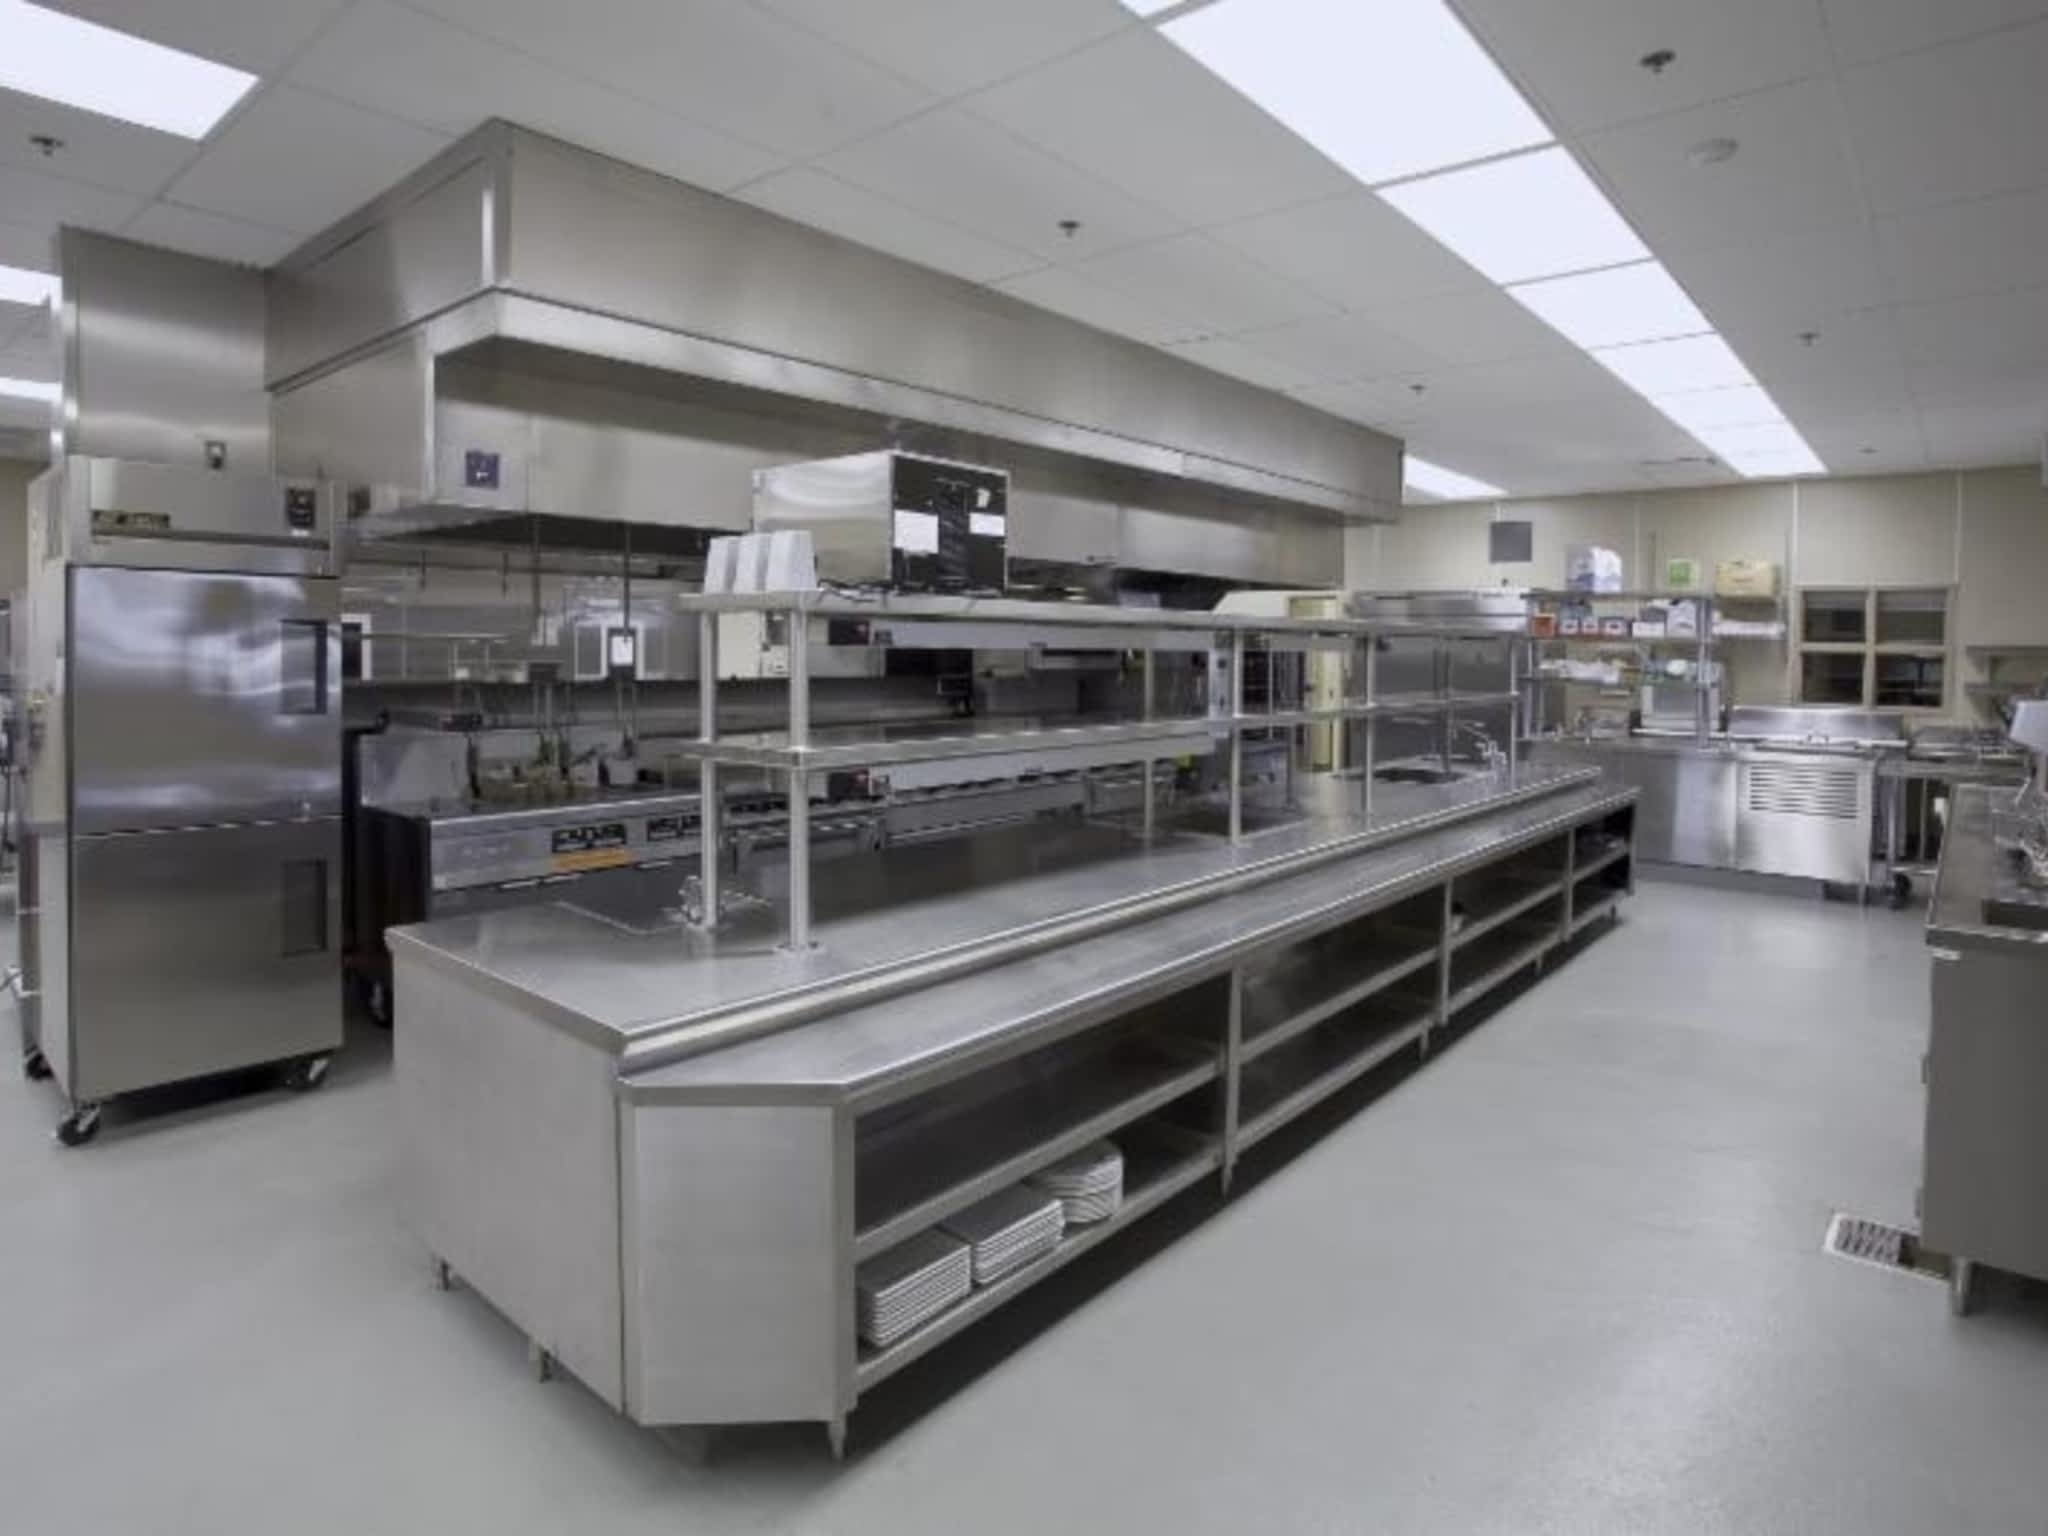 photo Unimaster Appliances & Food Equipment Services Inc